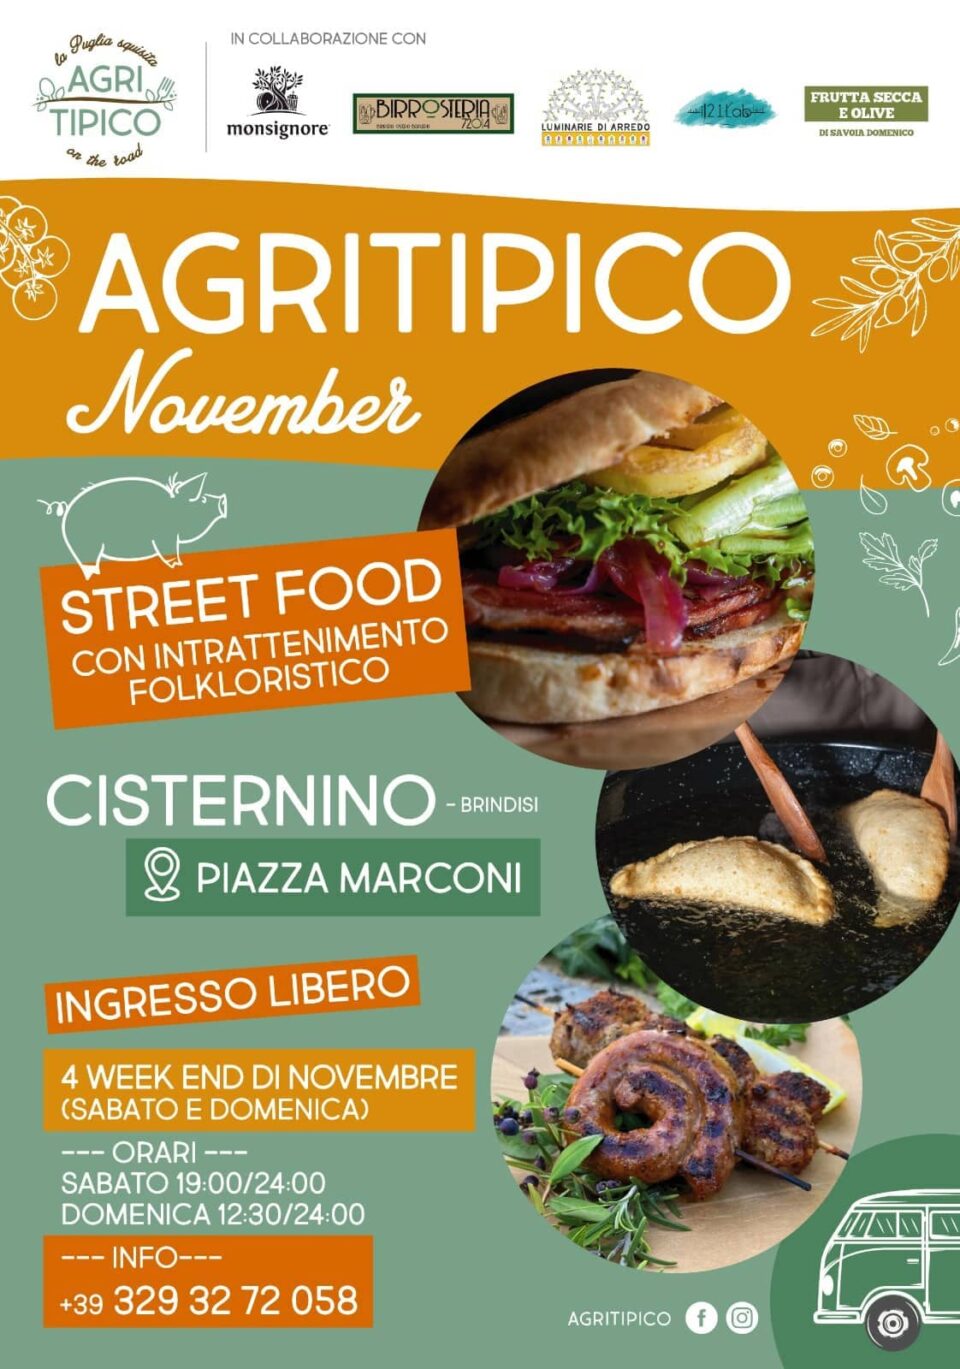 Sagra di Street food e folclore "Agritipico" (Credit: Proloco Cisternino)